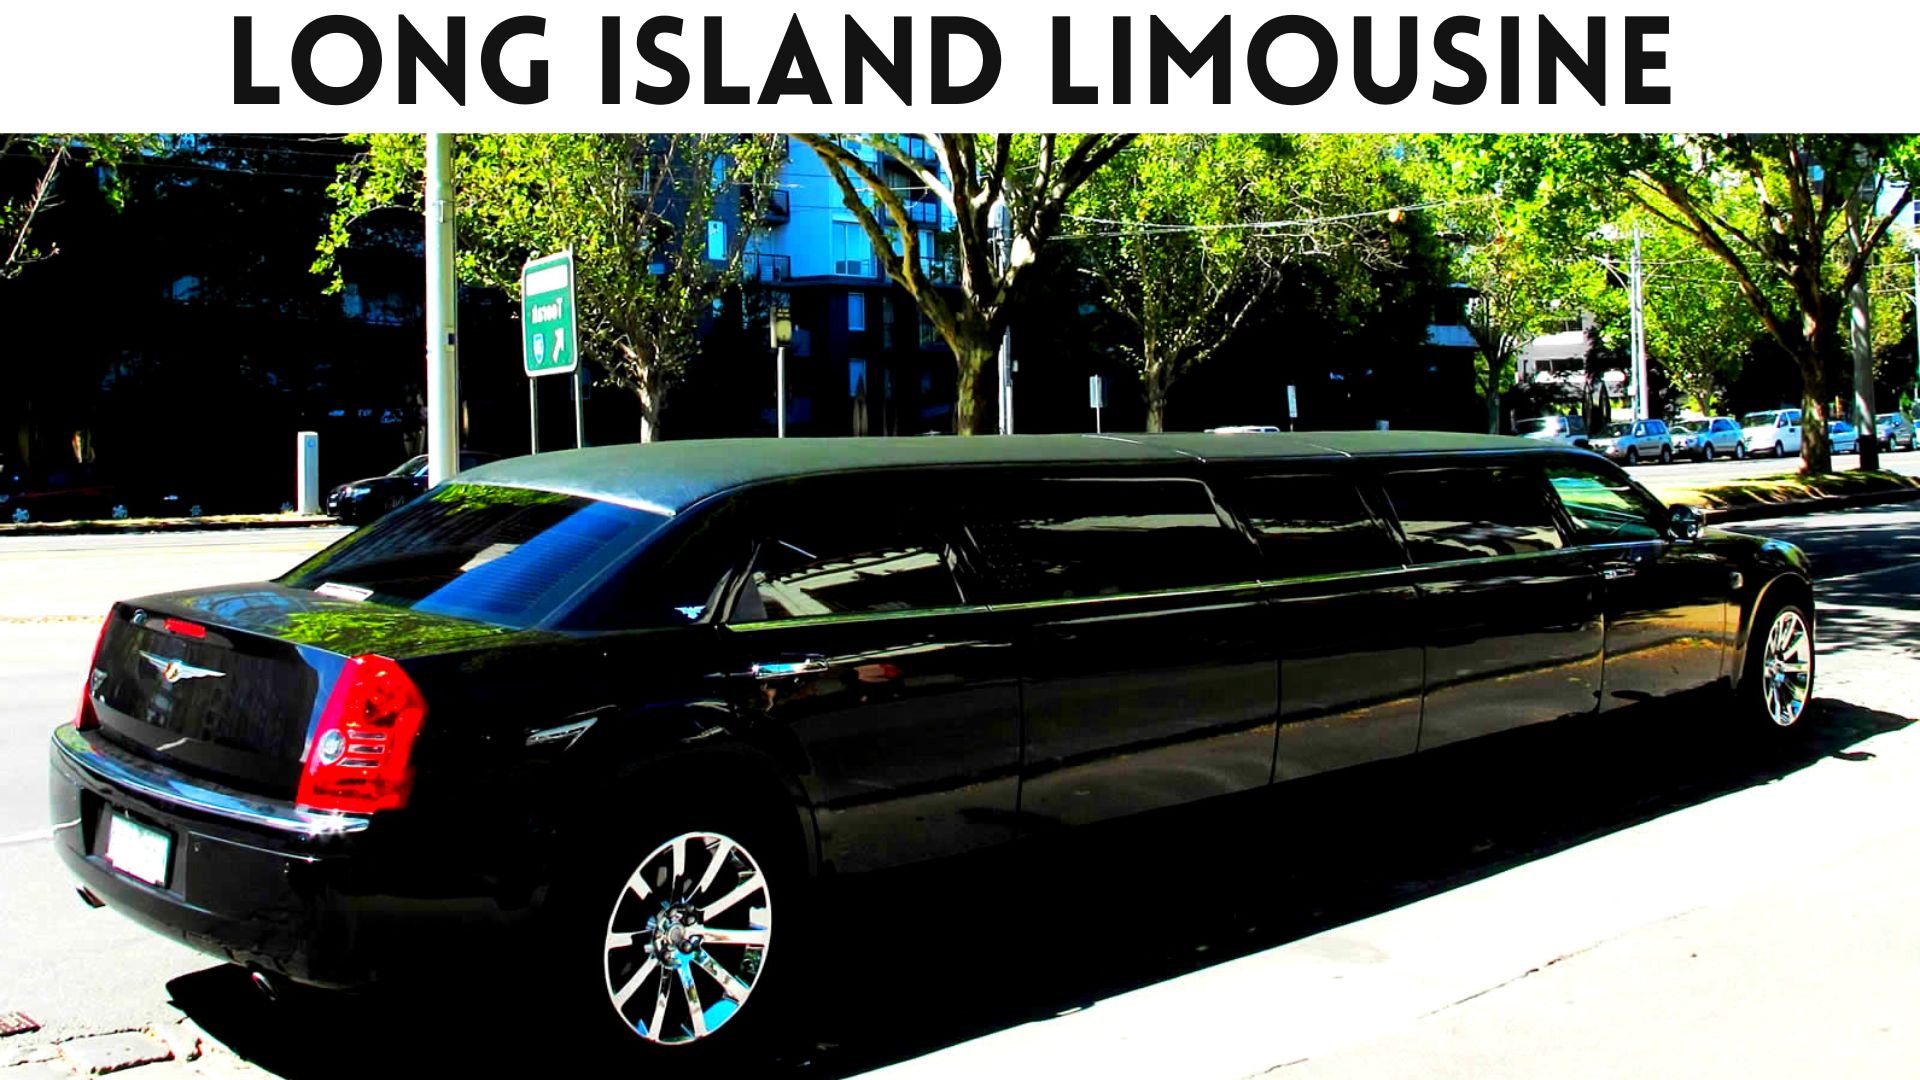 Long Island Limousine